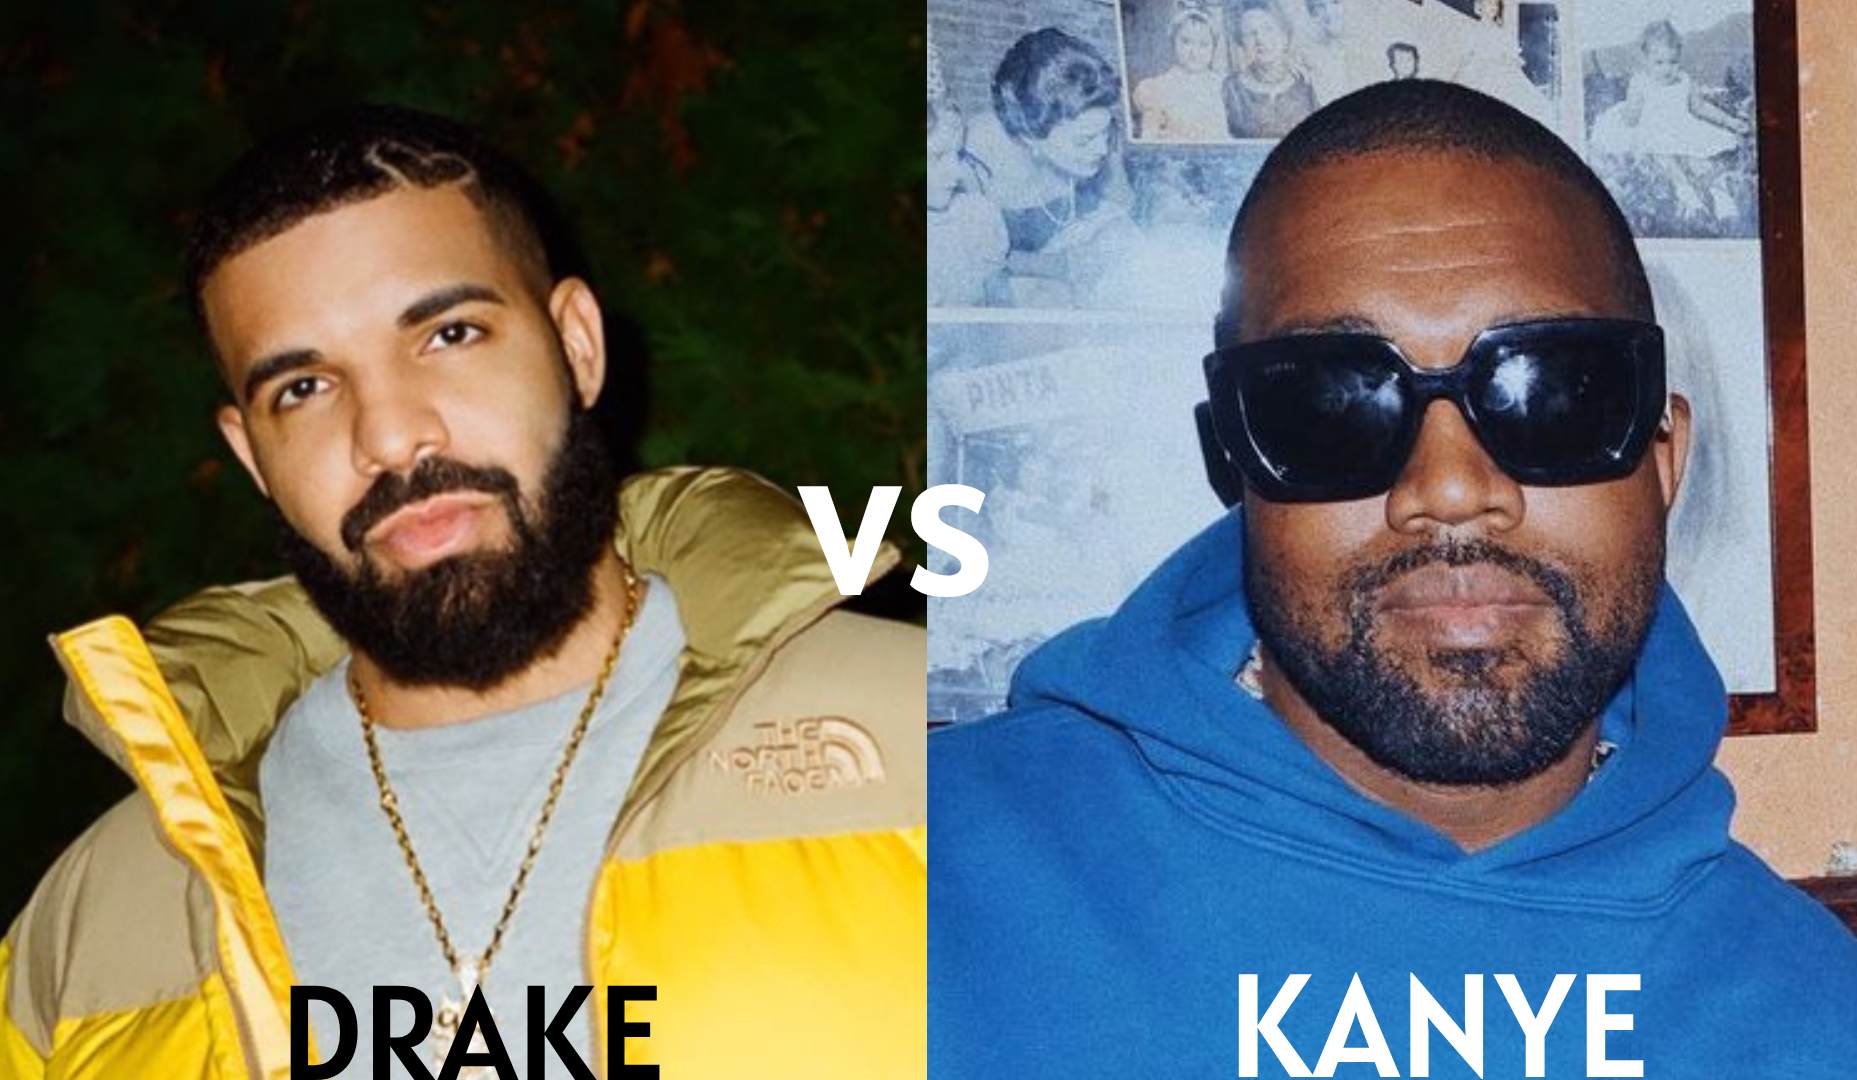 Drake vs Kanye Who is more famous